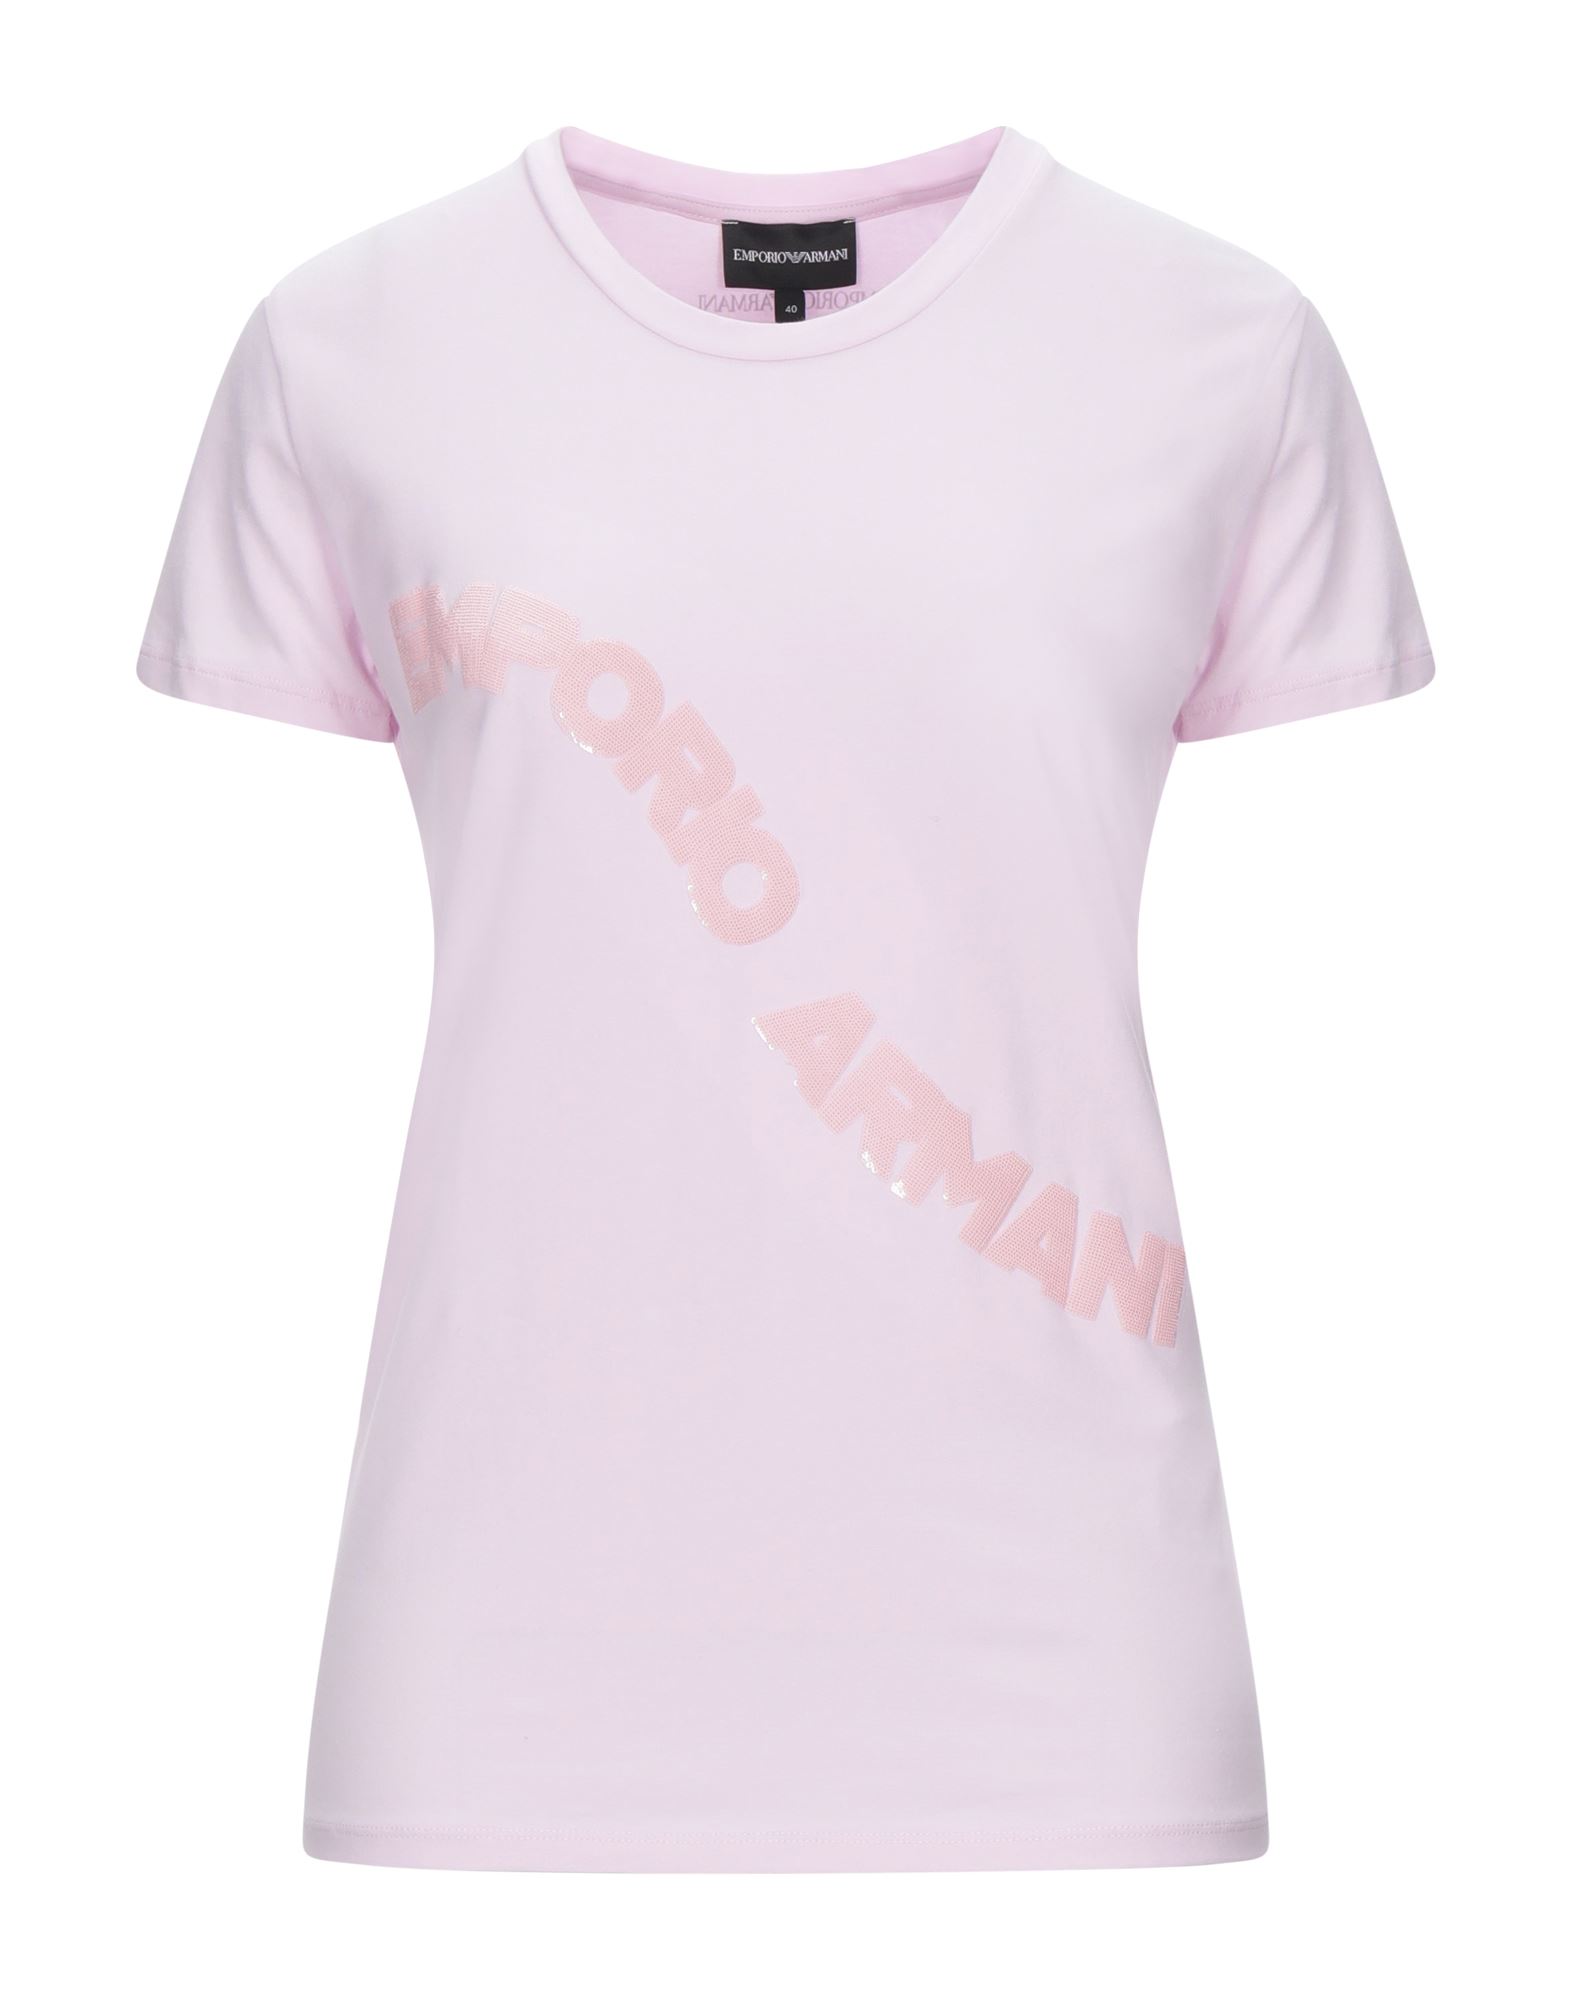 EMPORIO ARMANI T-shirts - Item 12524317